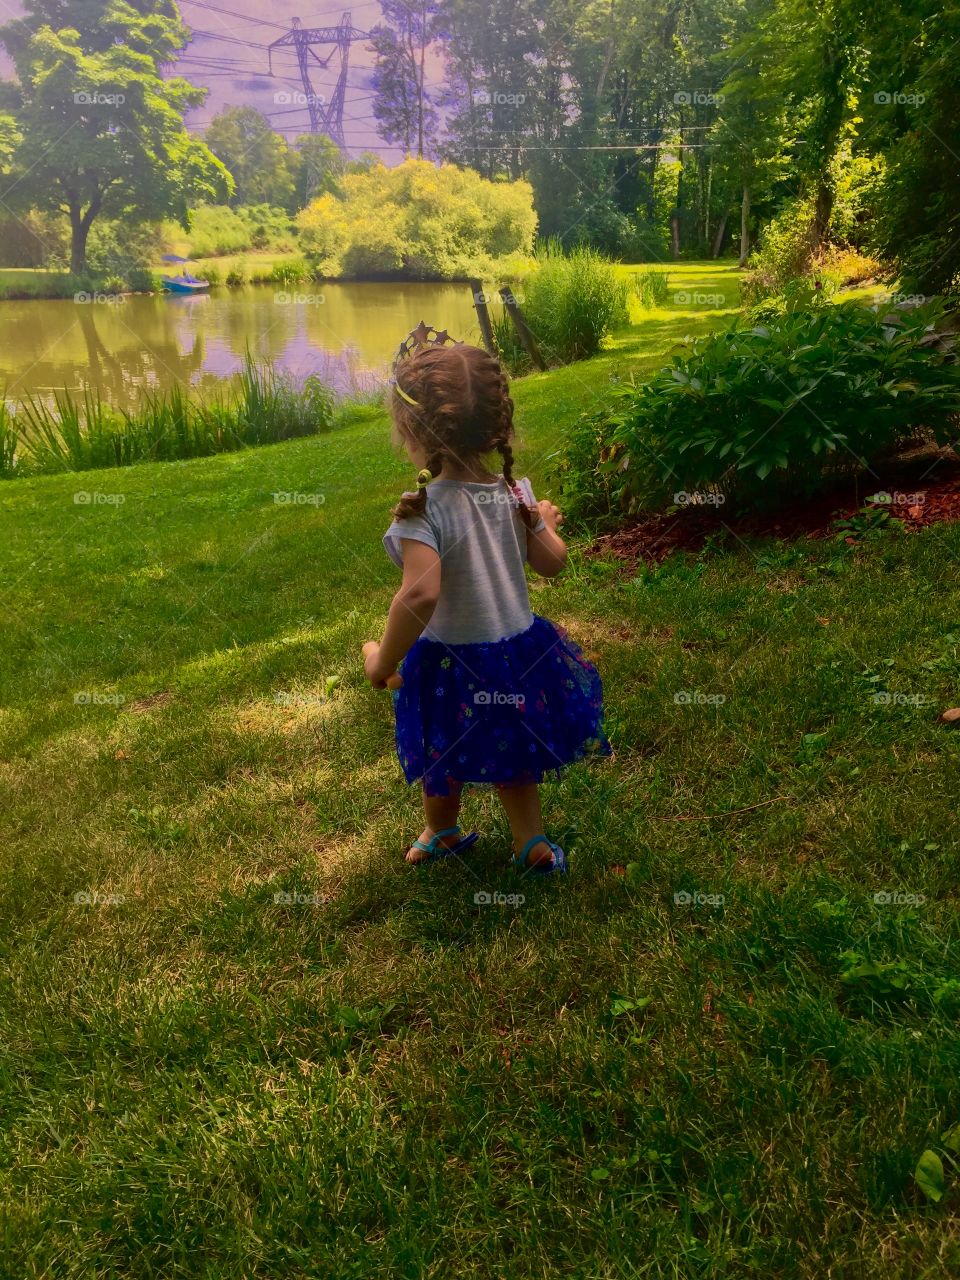 Cute toddler dressed like a princess